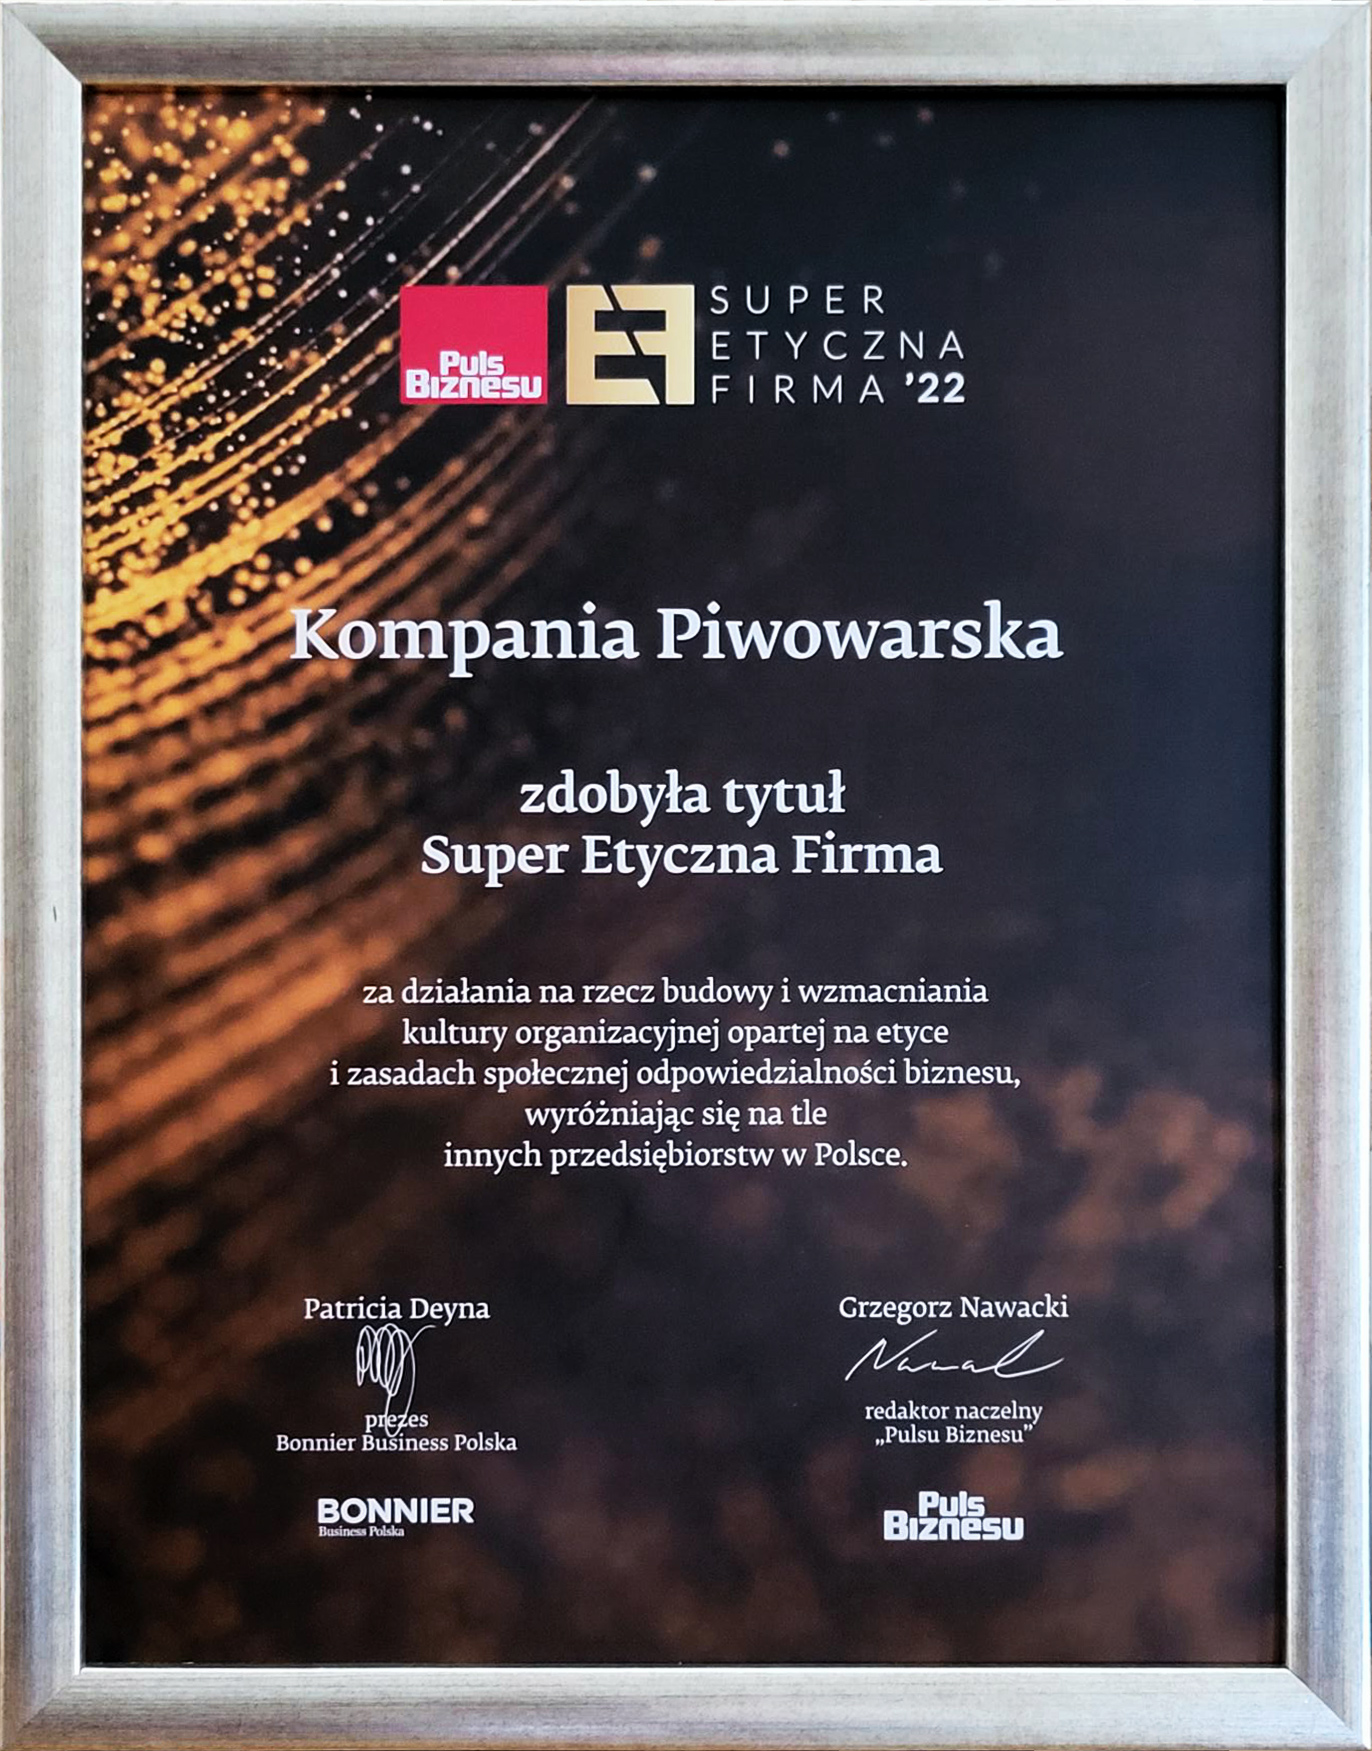 Kompania Piwowarska named “Super Ethical Company 2022”